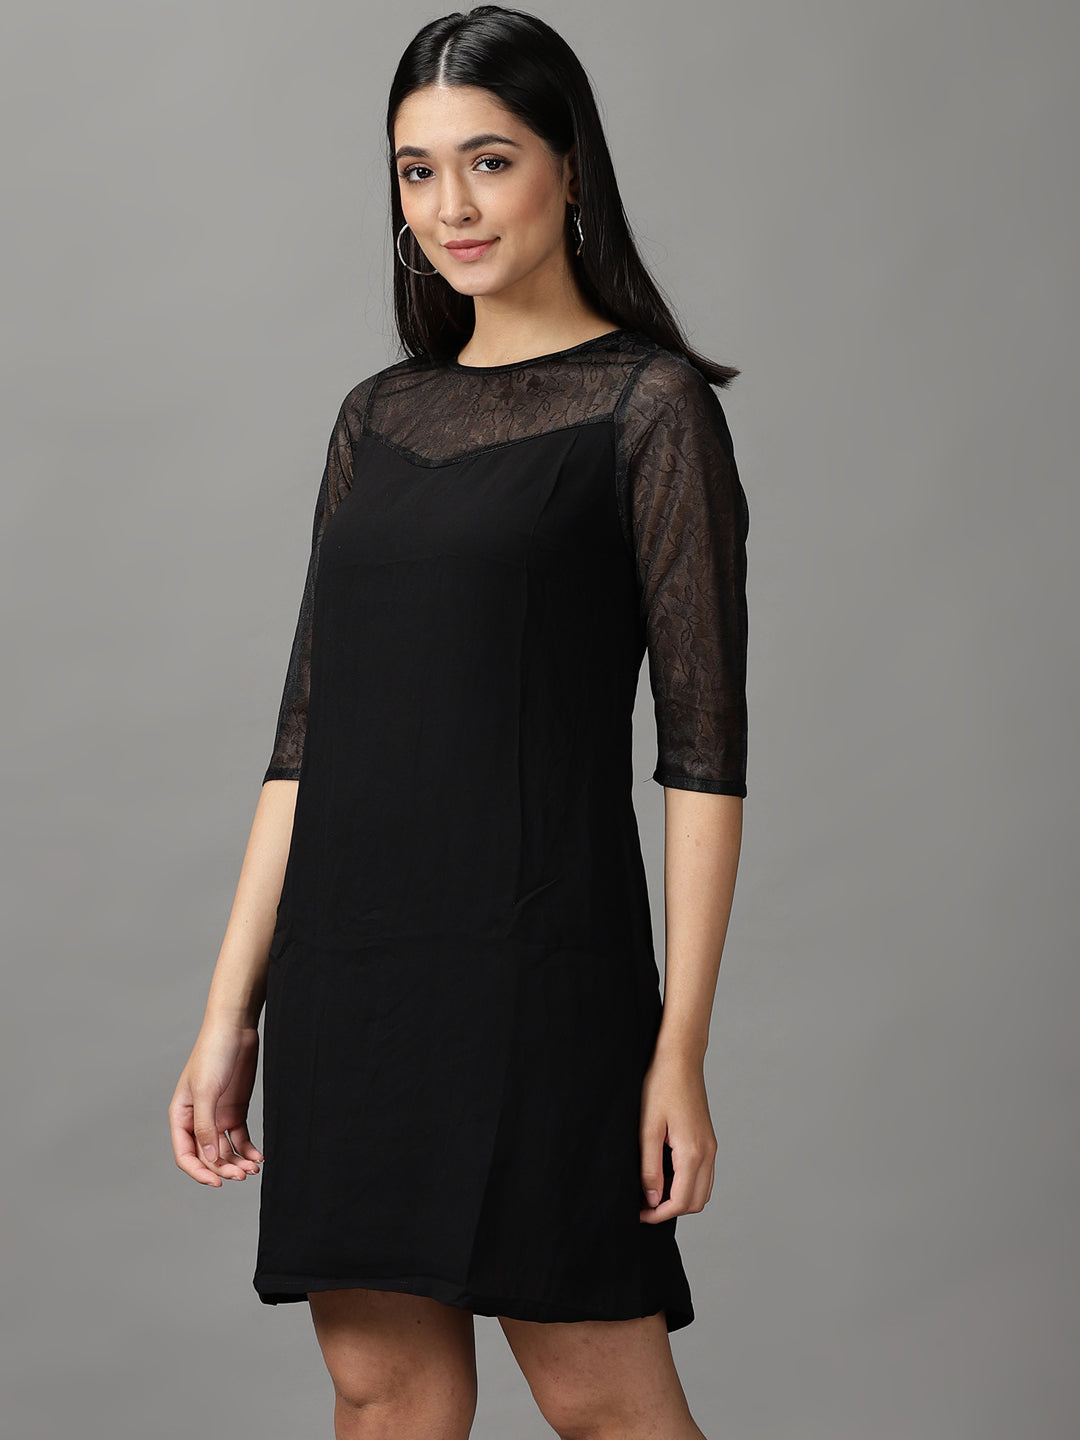 Women's Black Solid A-Line Dress